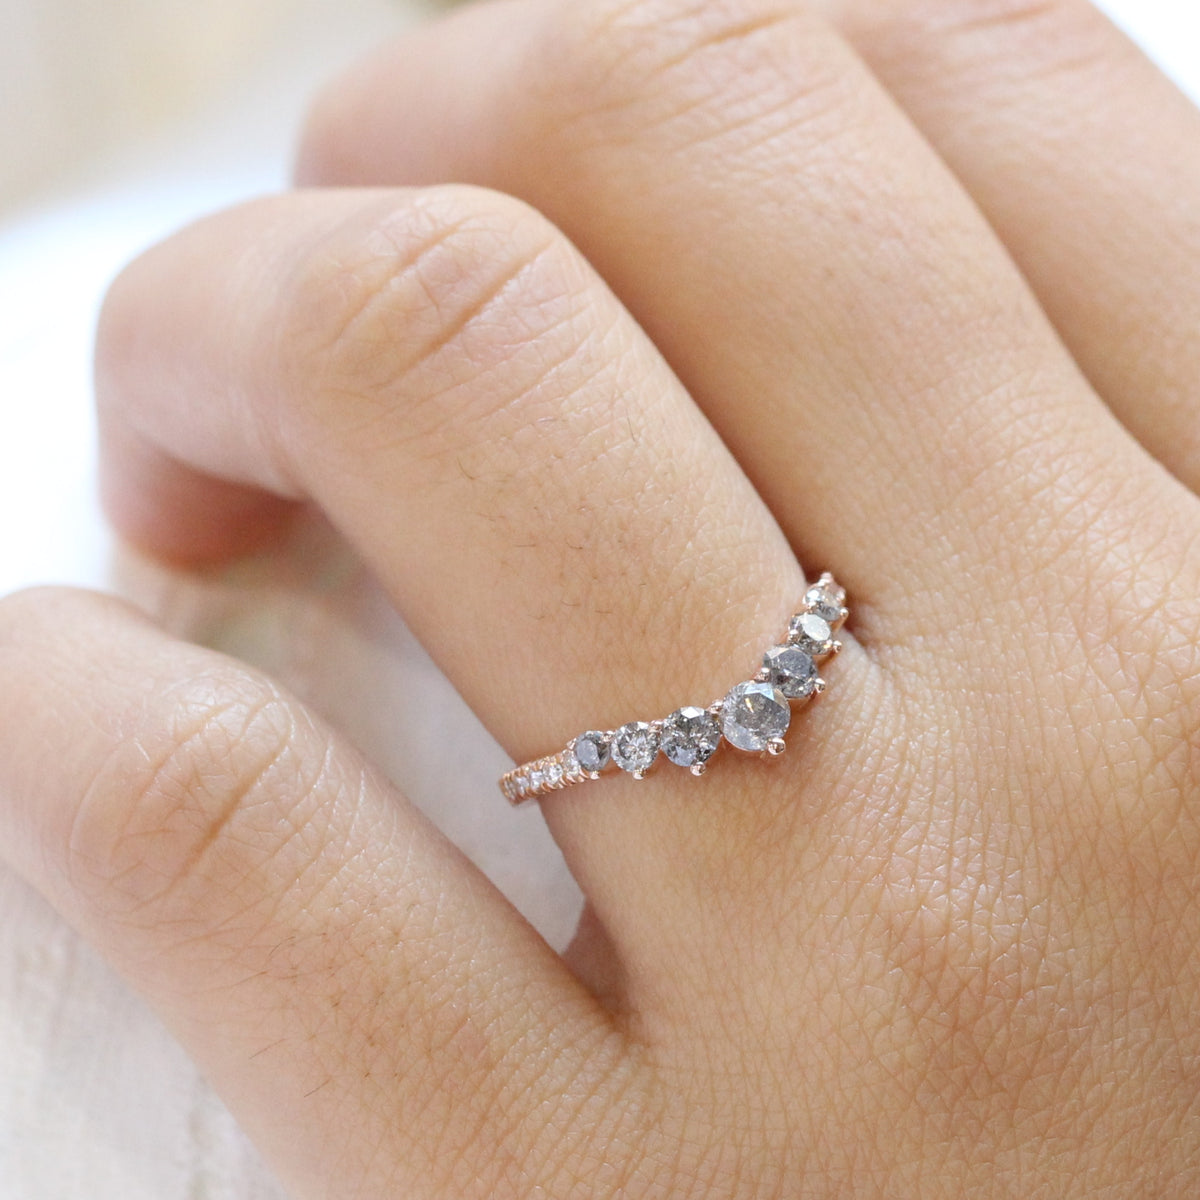 Large salt and pepper diamond wedding band rose gold grey diamond ring la more design jewelry